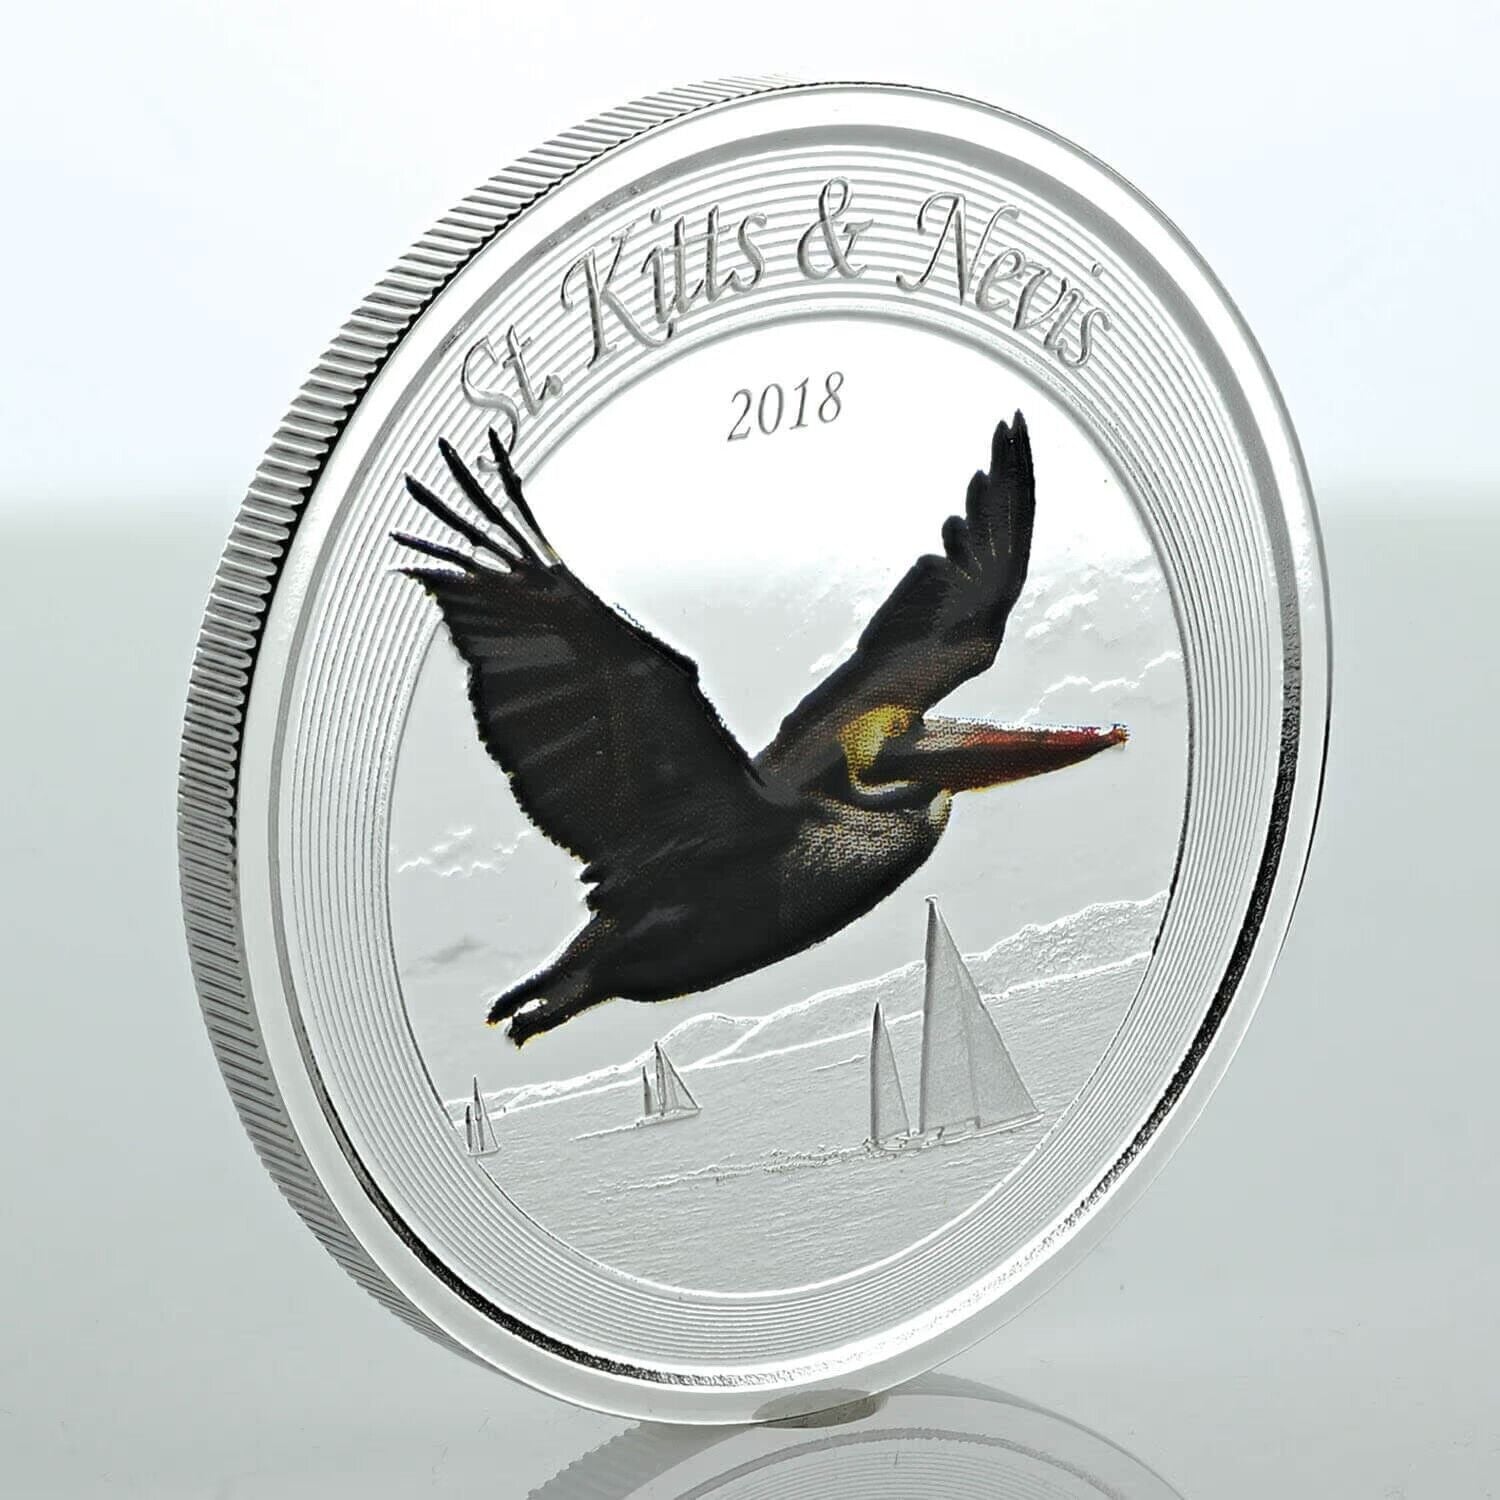 1 Oz Silver Coin 2018 EC8 Saint Kitts & Nevis $2 Color Proof - Brown Pelican-classypw.com-1